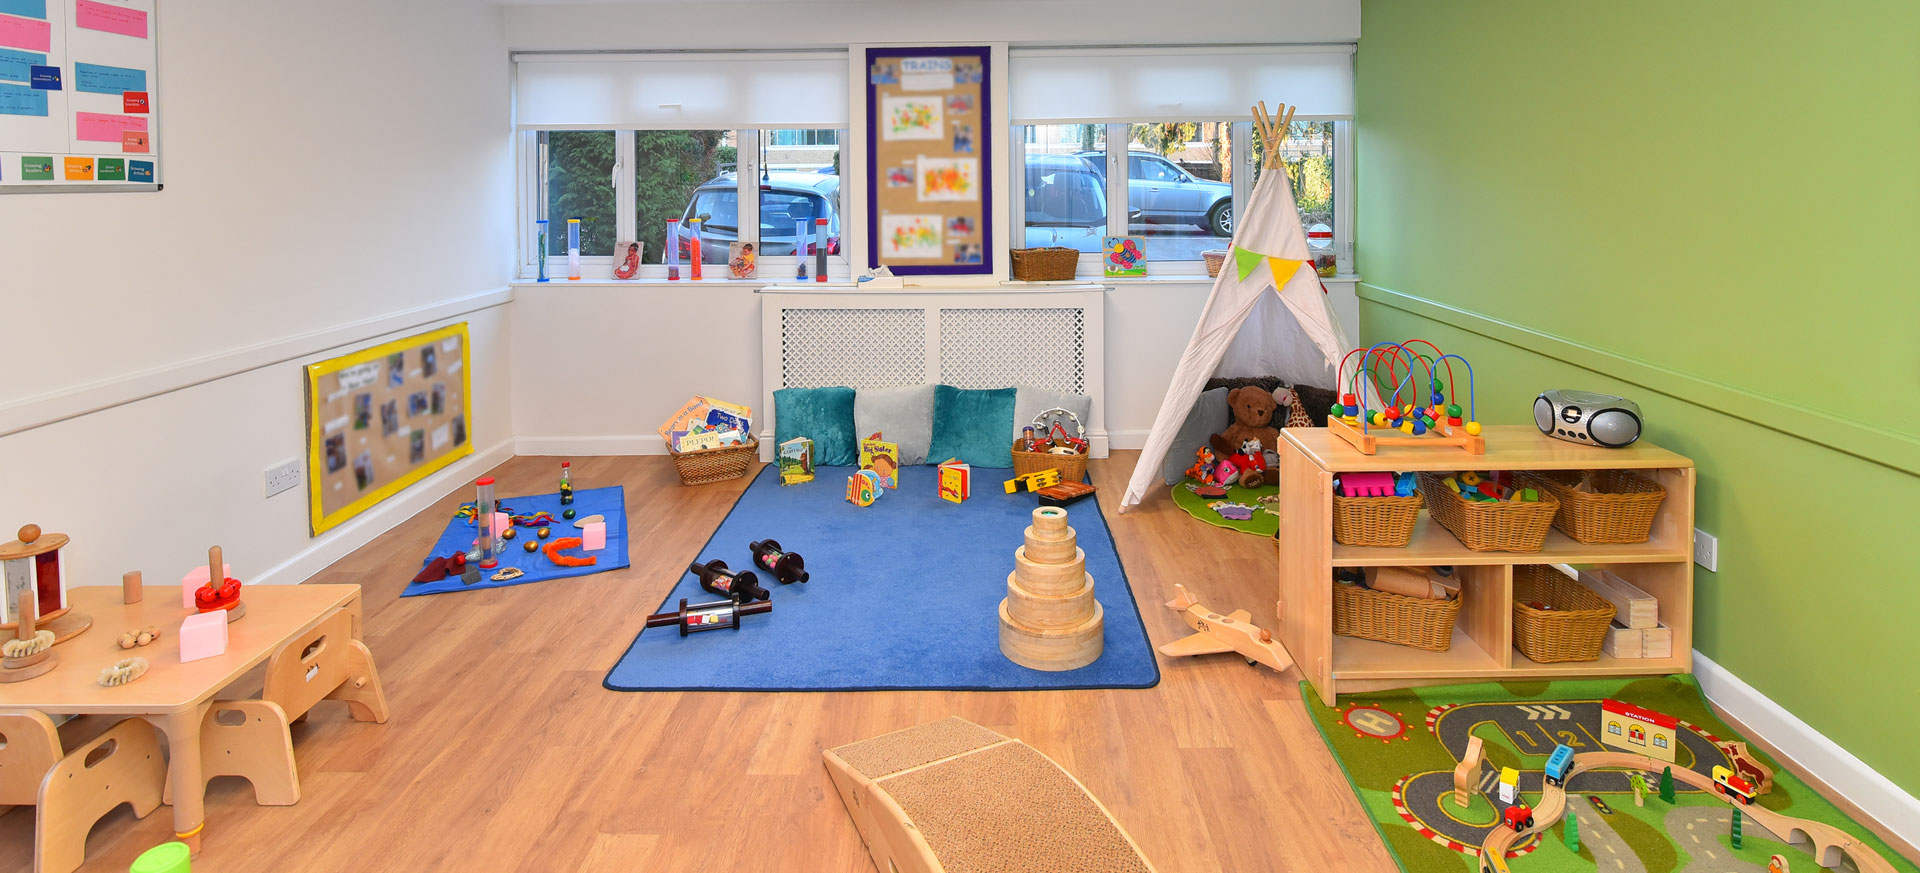 Bracknell Day Nursery and Preschool